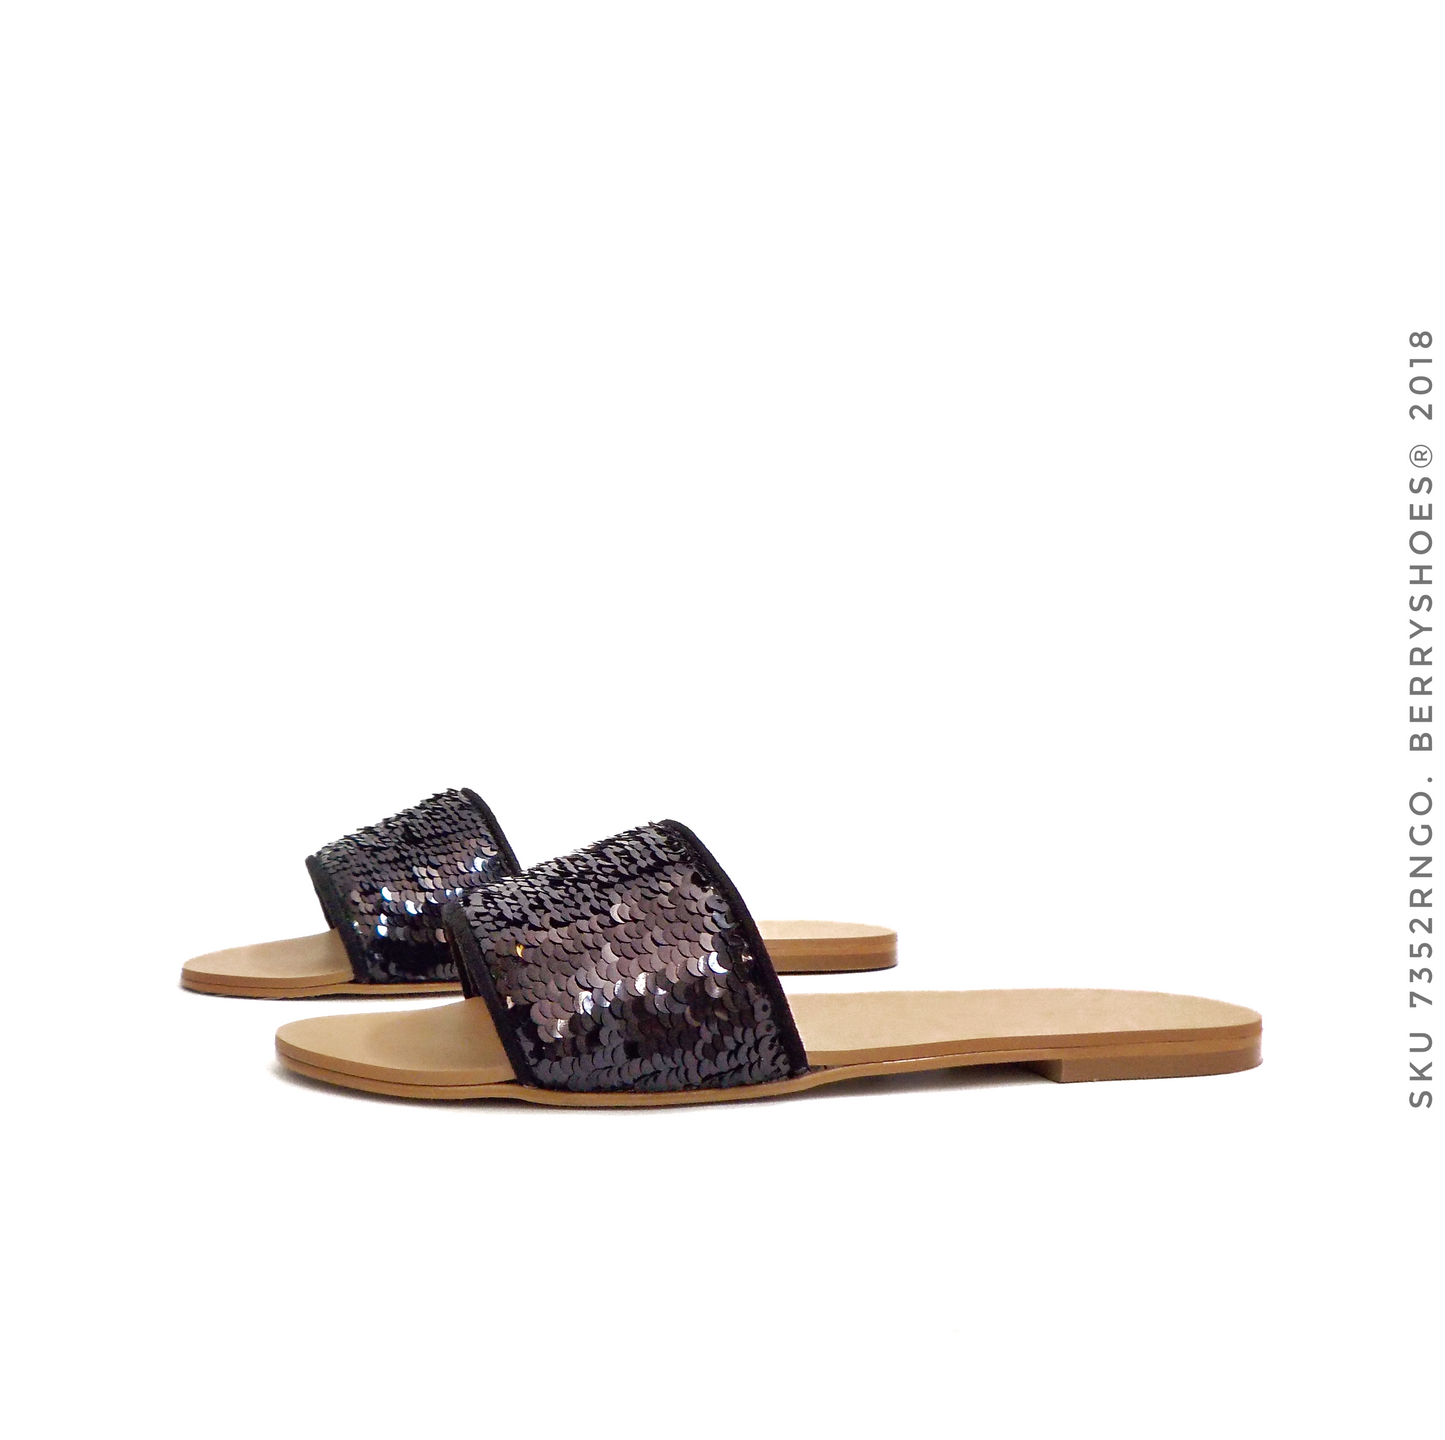 Sandalia lentejuelas - Berry shoes México - Sandalias - 7352NGO